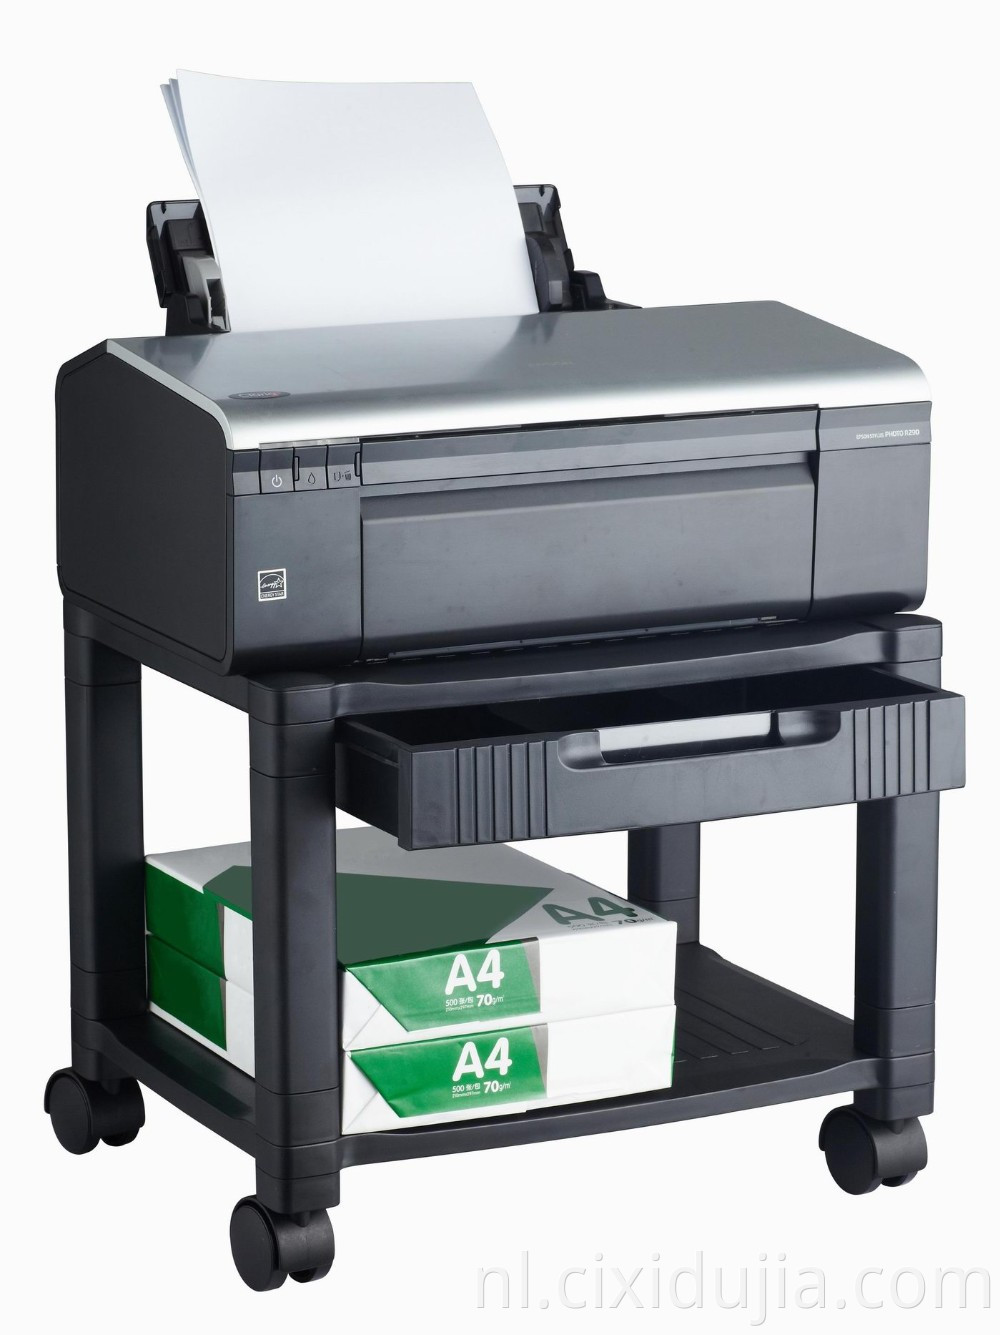 2 Tiers Shelf Printer stand